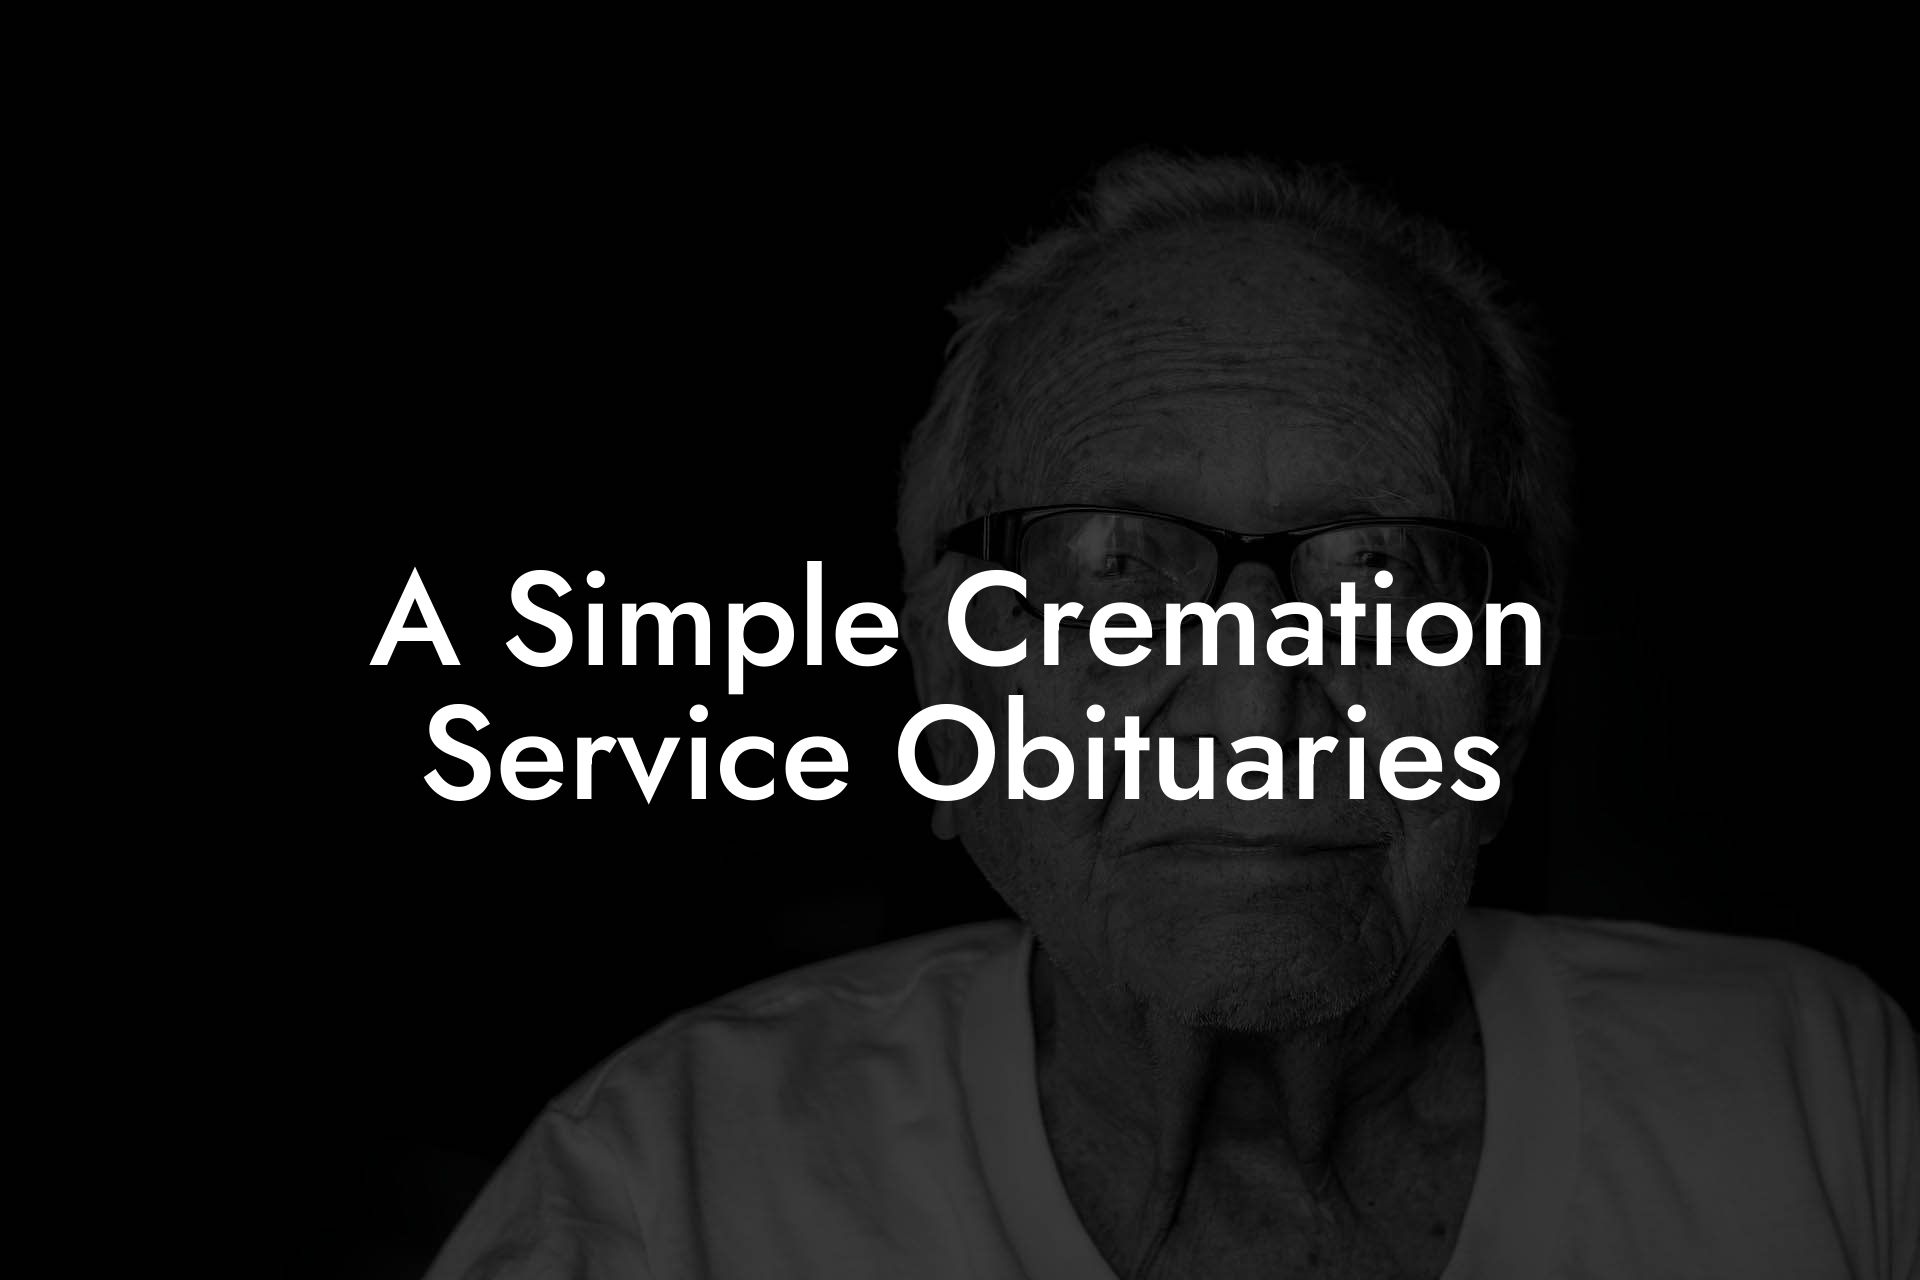 A Simple Cremation Service Obituaries